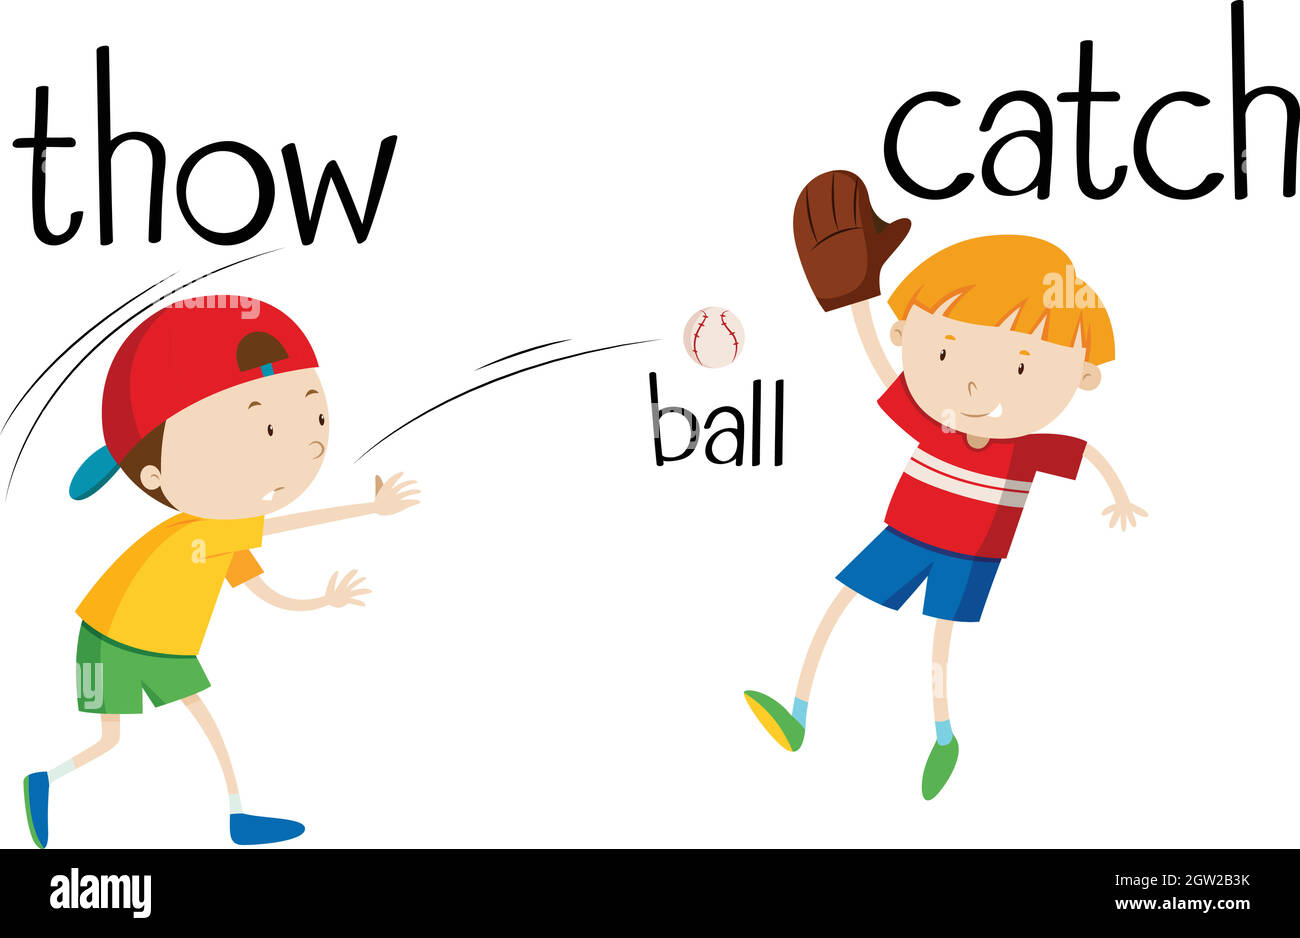 He can catch. Catch изображение. Throw изображение. Throw картинка для детей. Catch the Ball Flashcard.